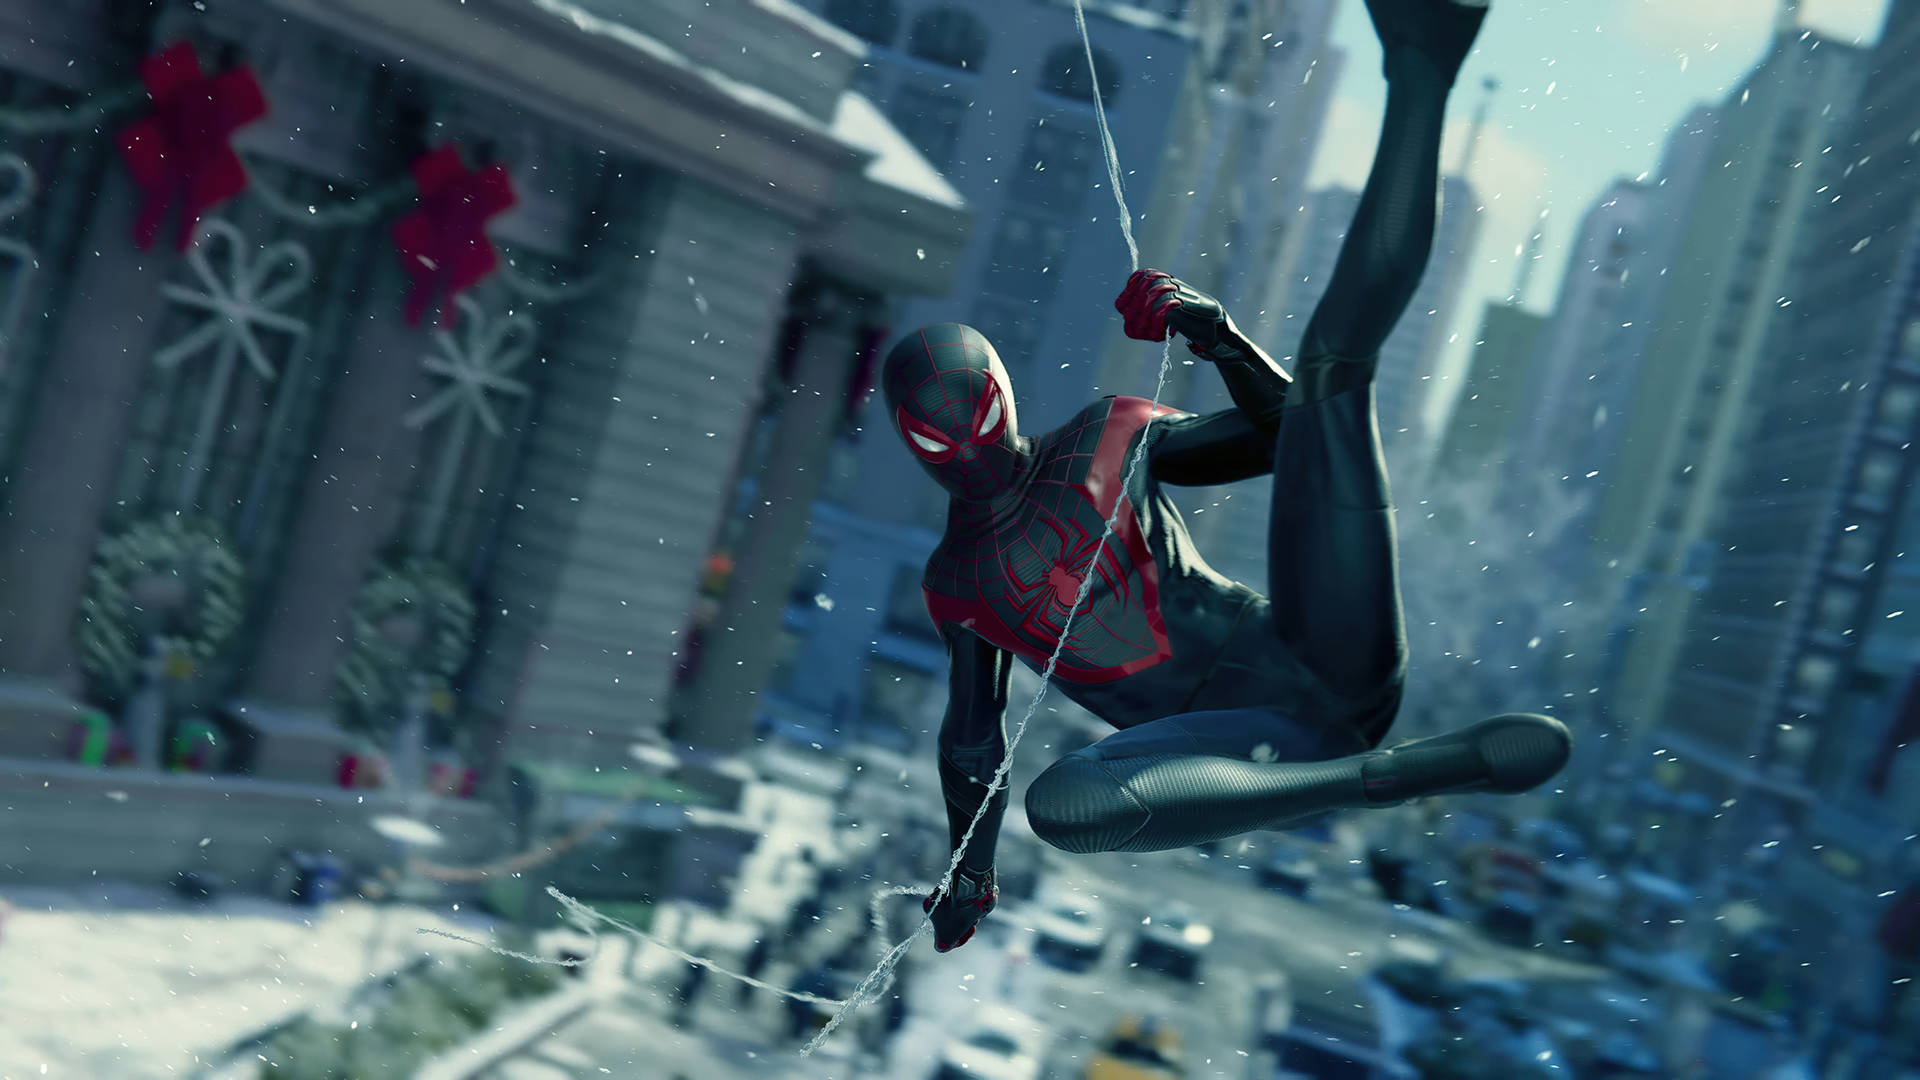 Download Black Spiderman Swinging In The City Wallpaper 